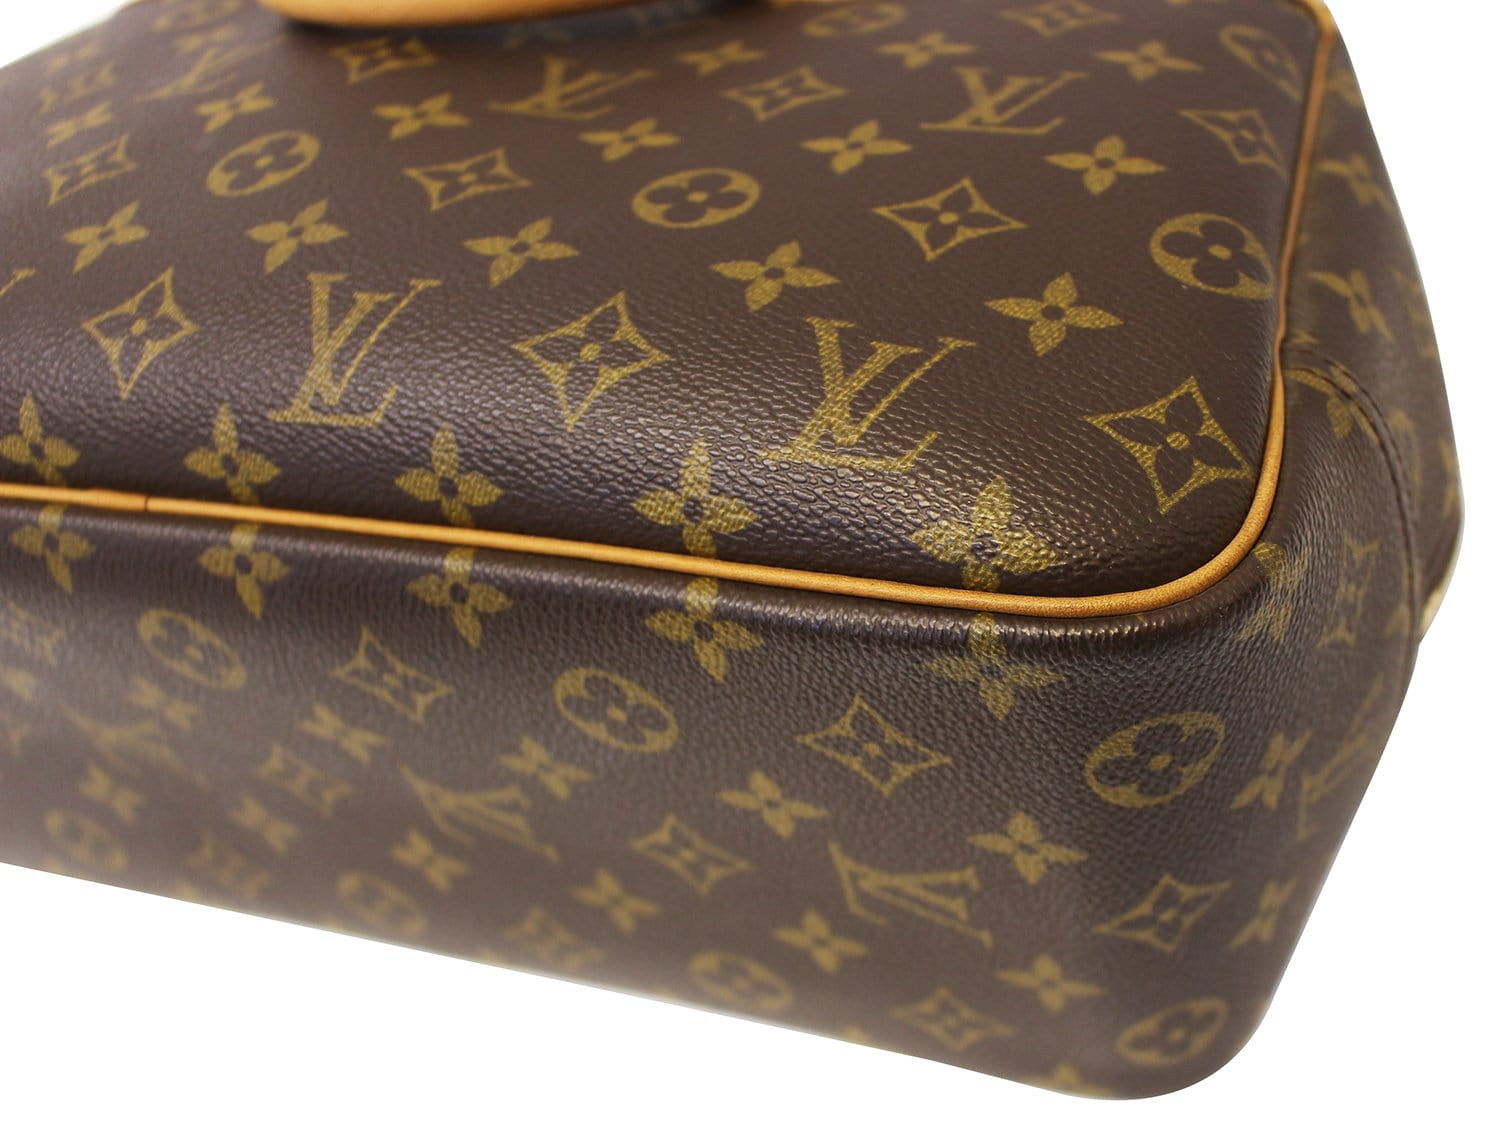 Louis Vuitton Deauville Handbag 375827